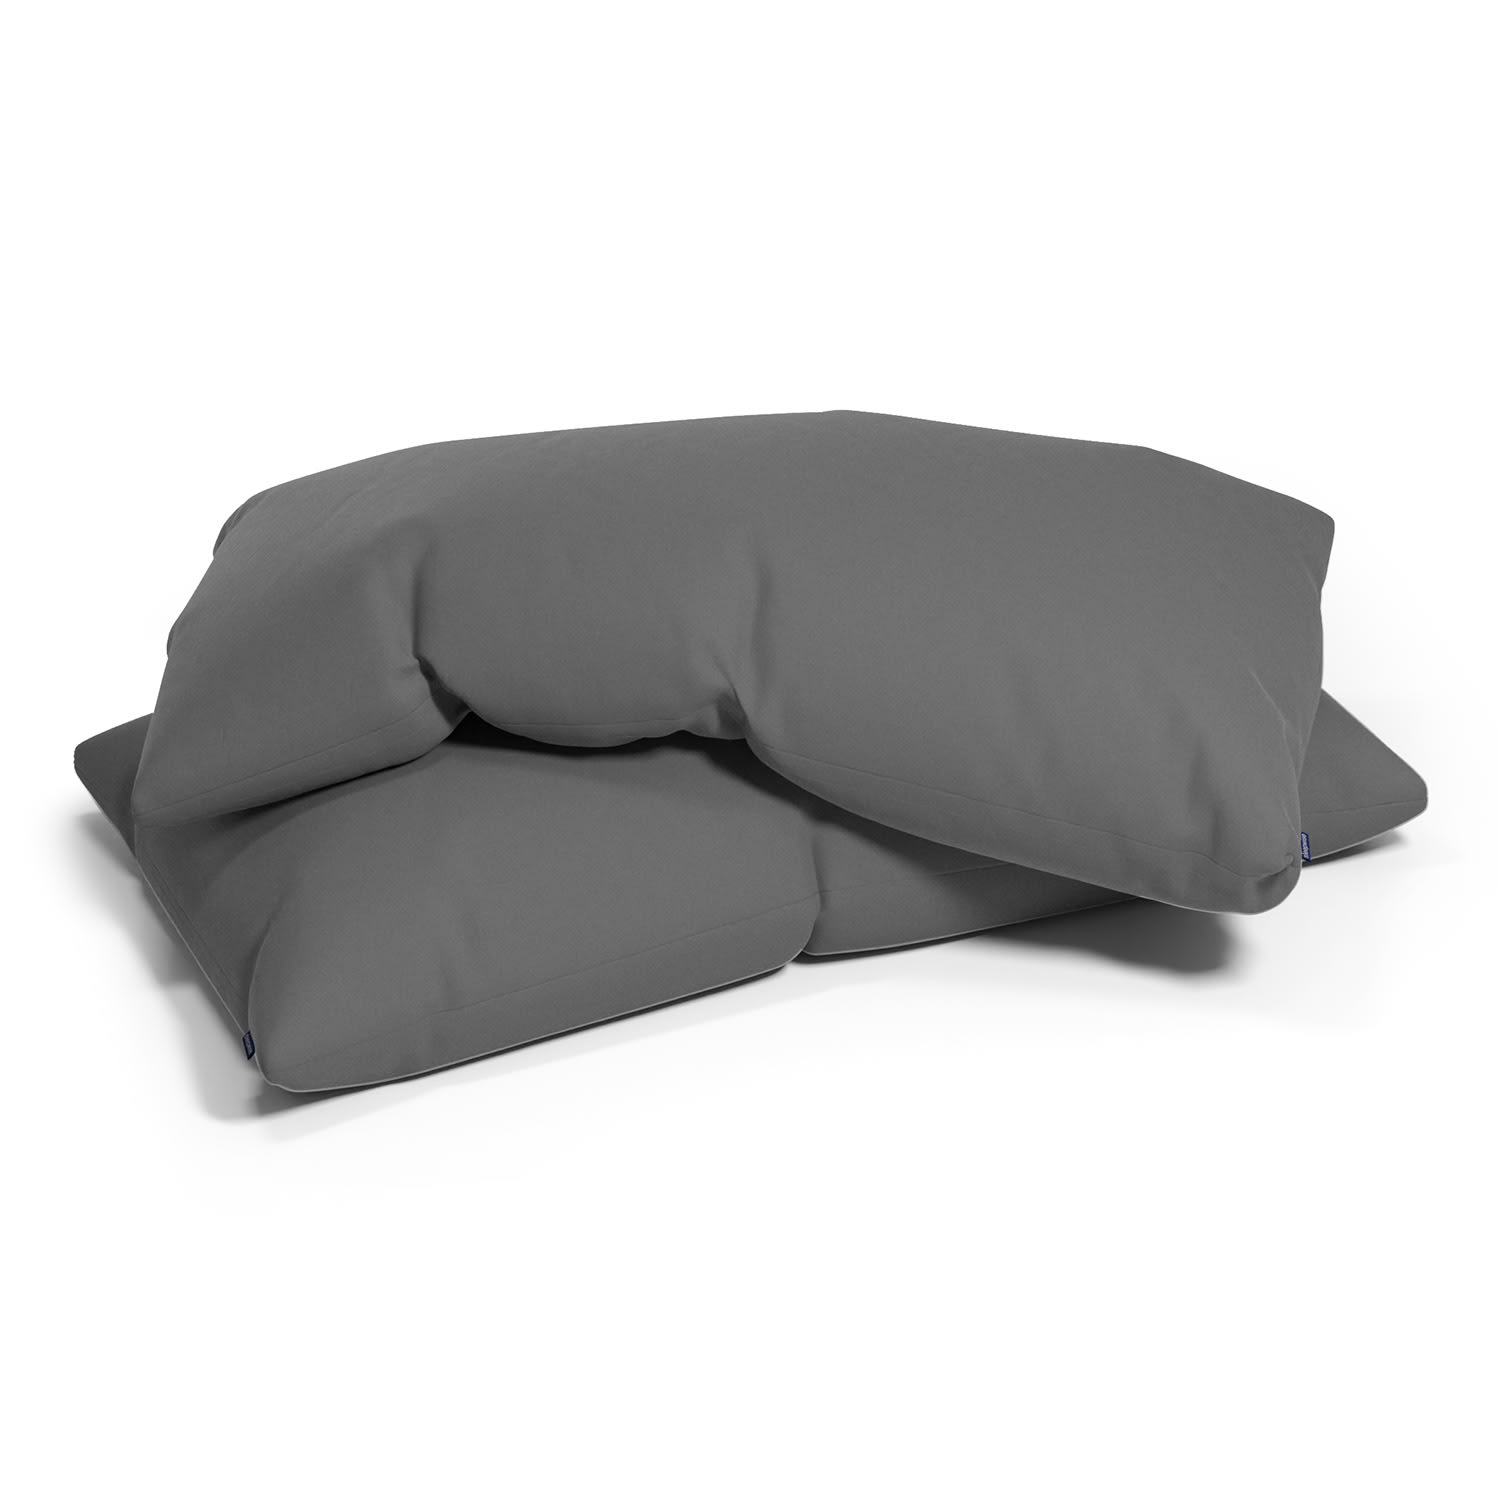 Sleepwise Soft Wonder-Edition, pillowcase, set of 2 pieces, 40 × 80 cm, microfiber